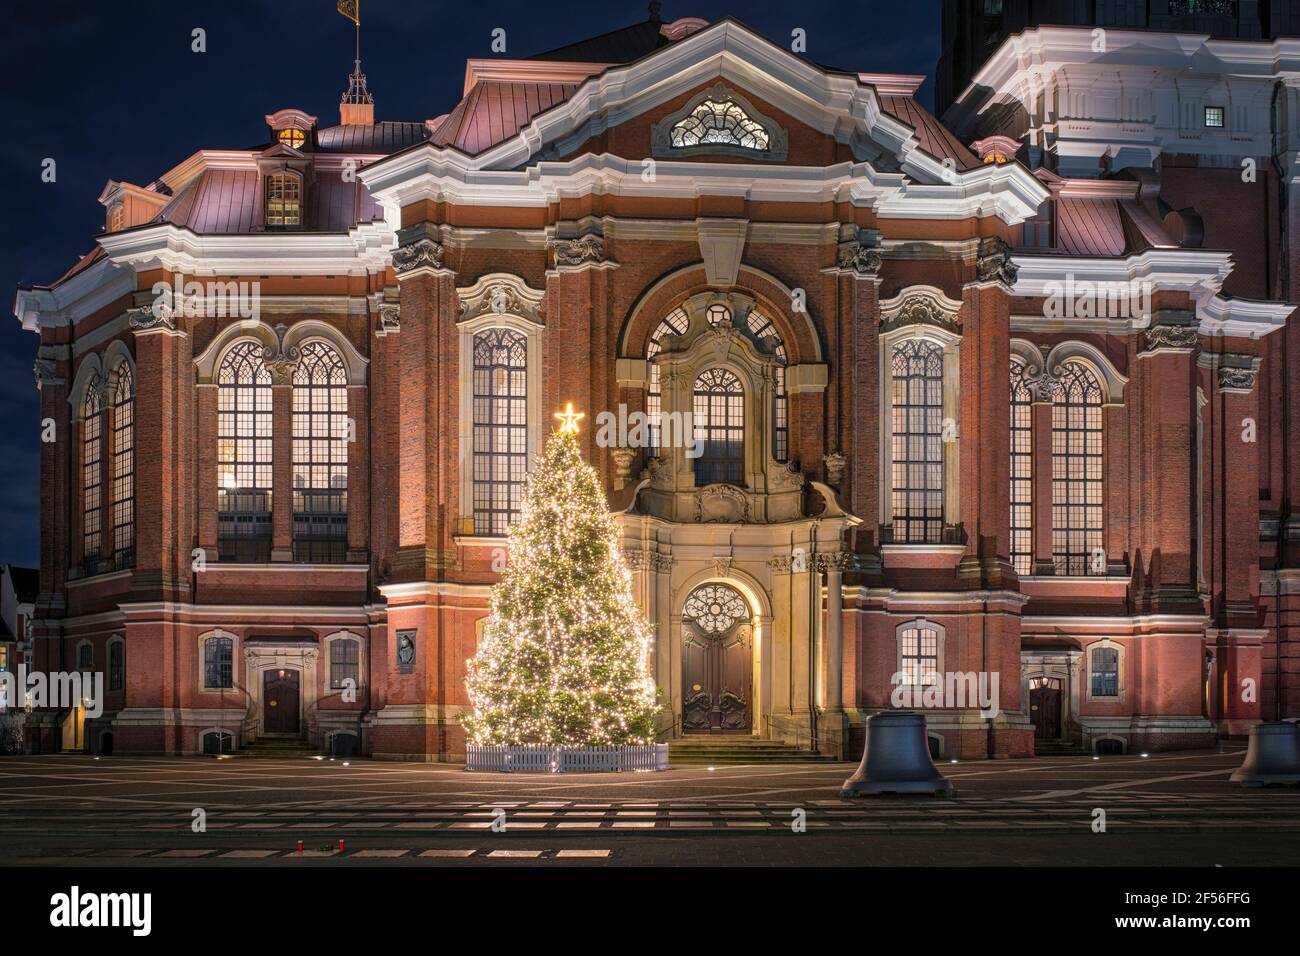 Germany, Hamburg, Christmas tree glowing in front of Saint Michaels Church at night Stock Photo